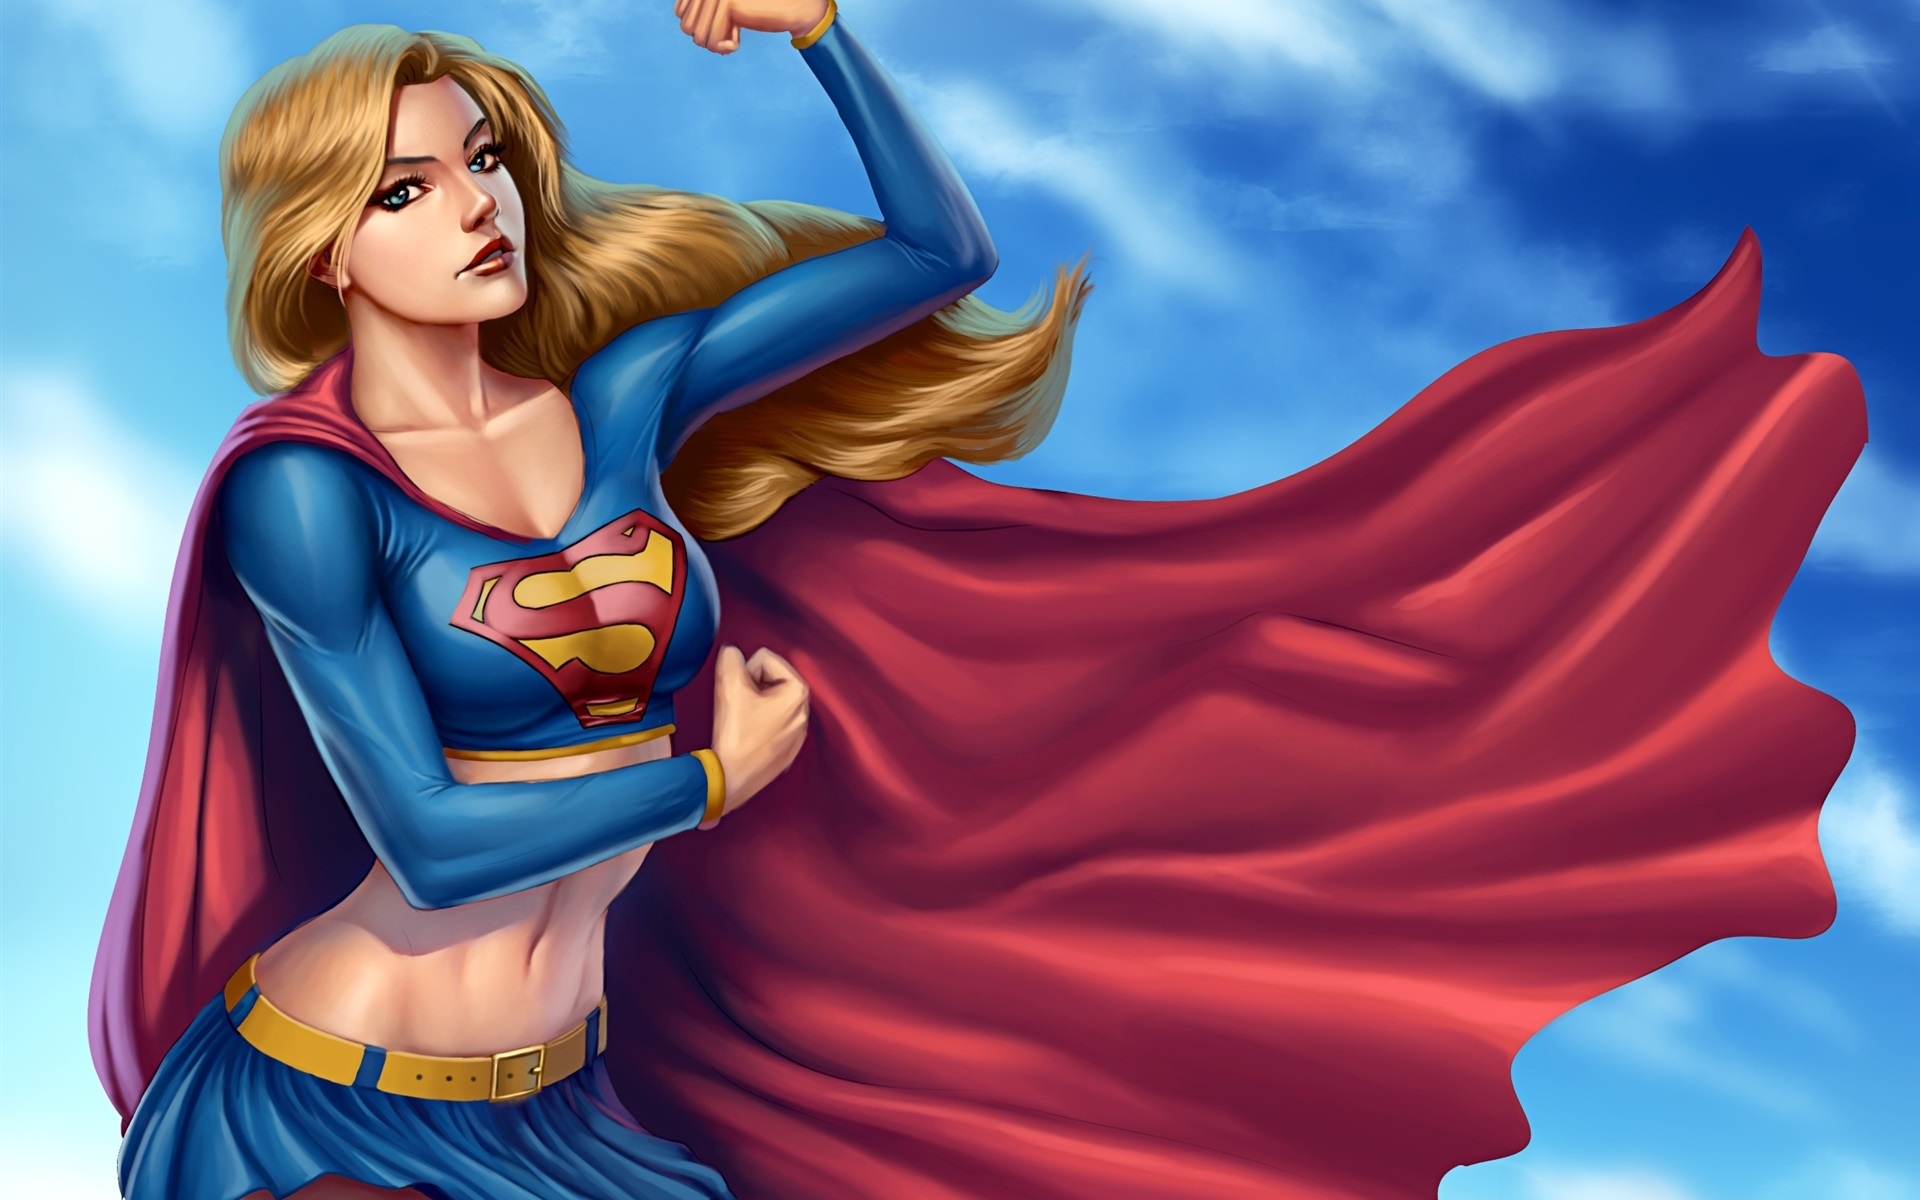 378856 Bild herunterladen comics, supergirl, kap, dc comics, kara zor el, superheld, superman der film - Hintergrundbilder und Bildschirmschoner kostenlos